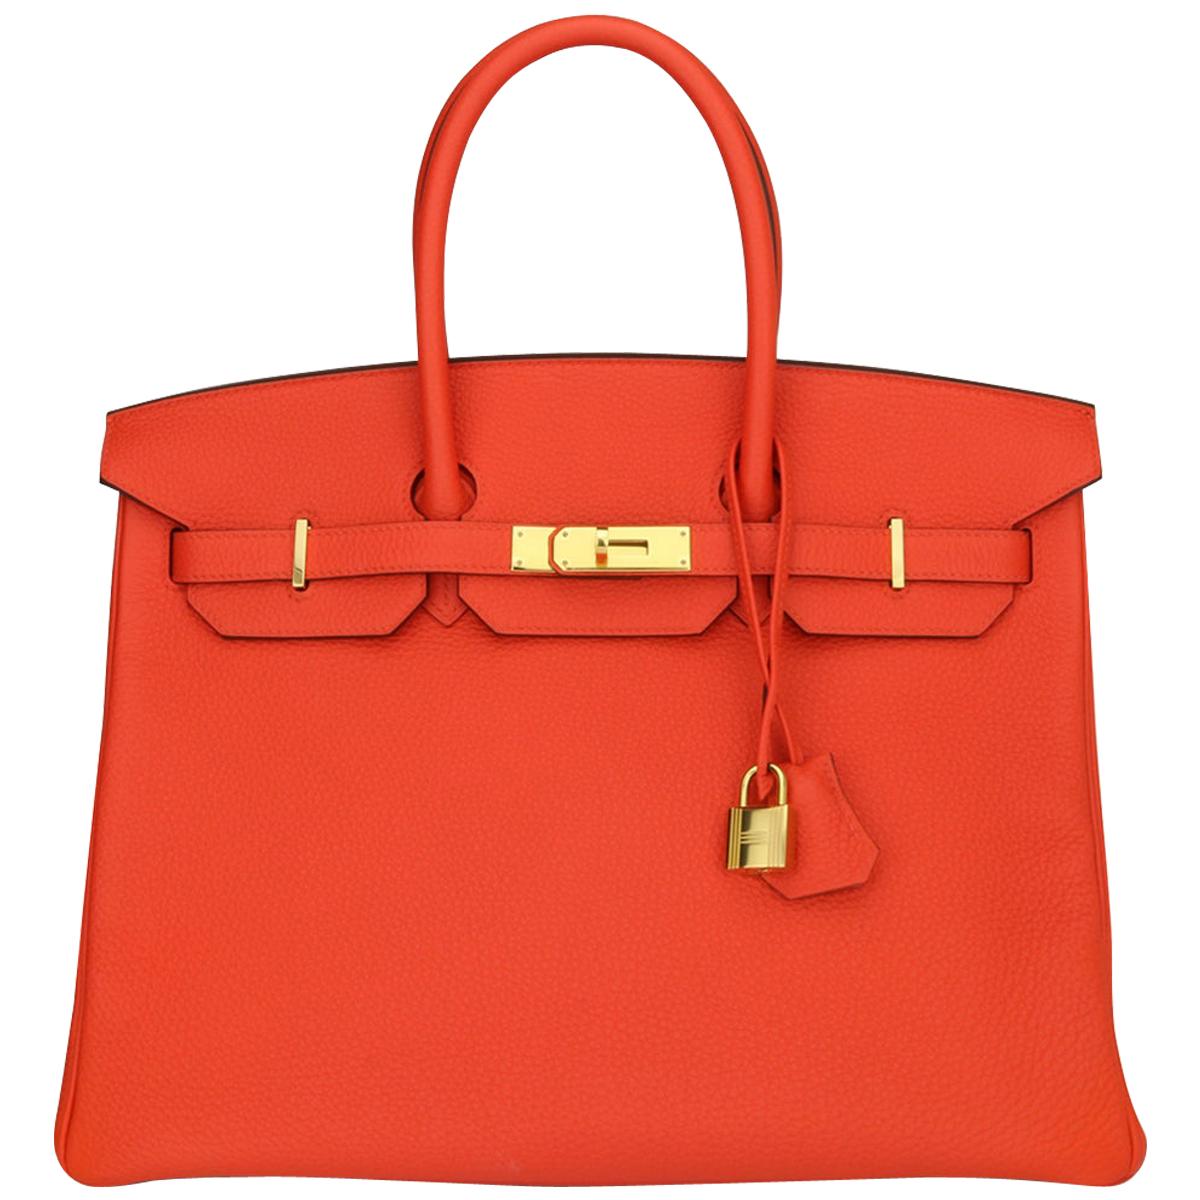 Hermès Birkin Bag 35cm Special Order HSS Bag Capucine Togo Leather w/GHW 2015